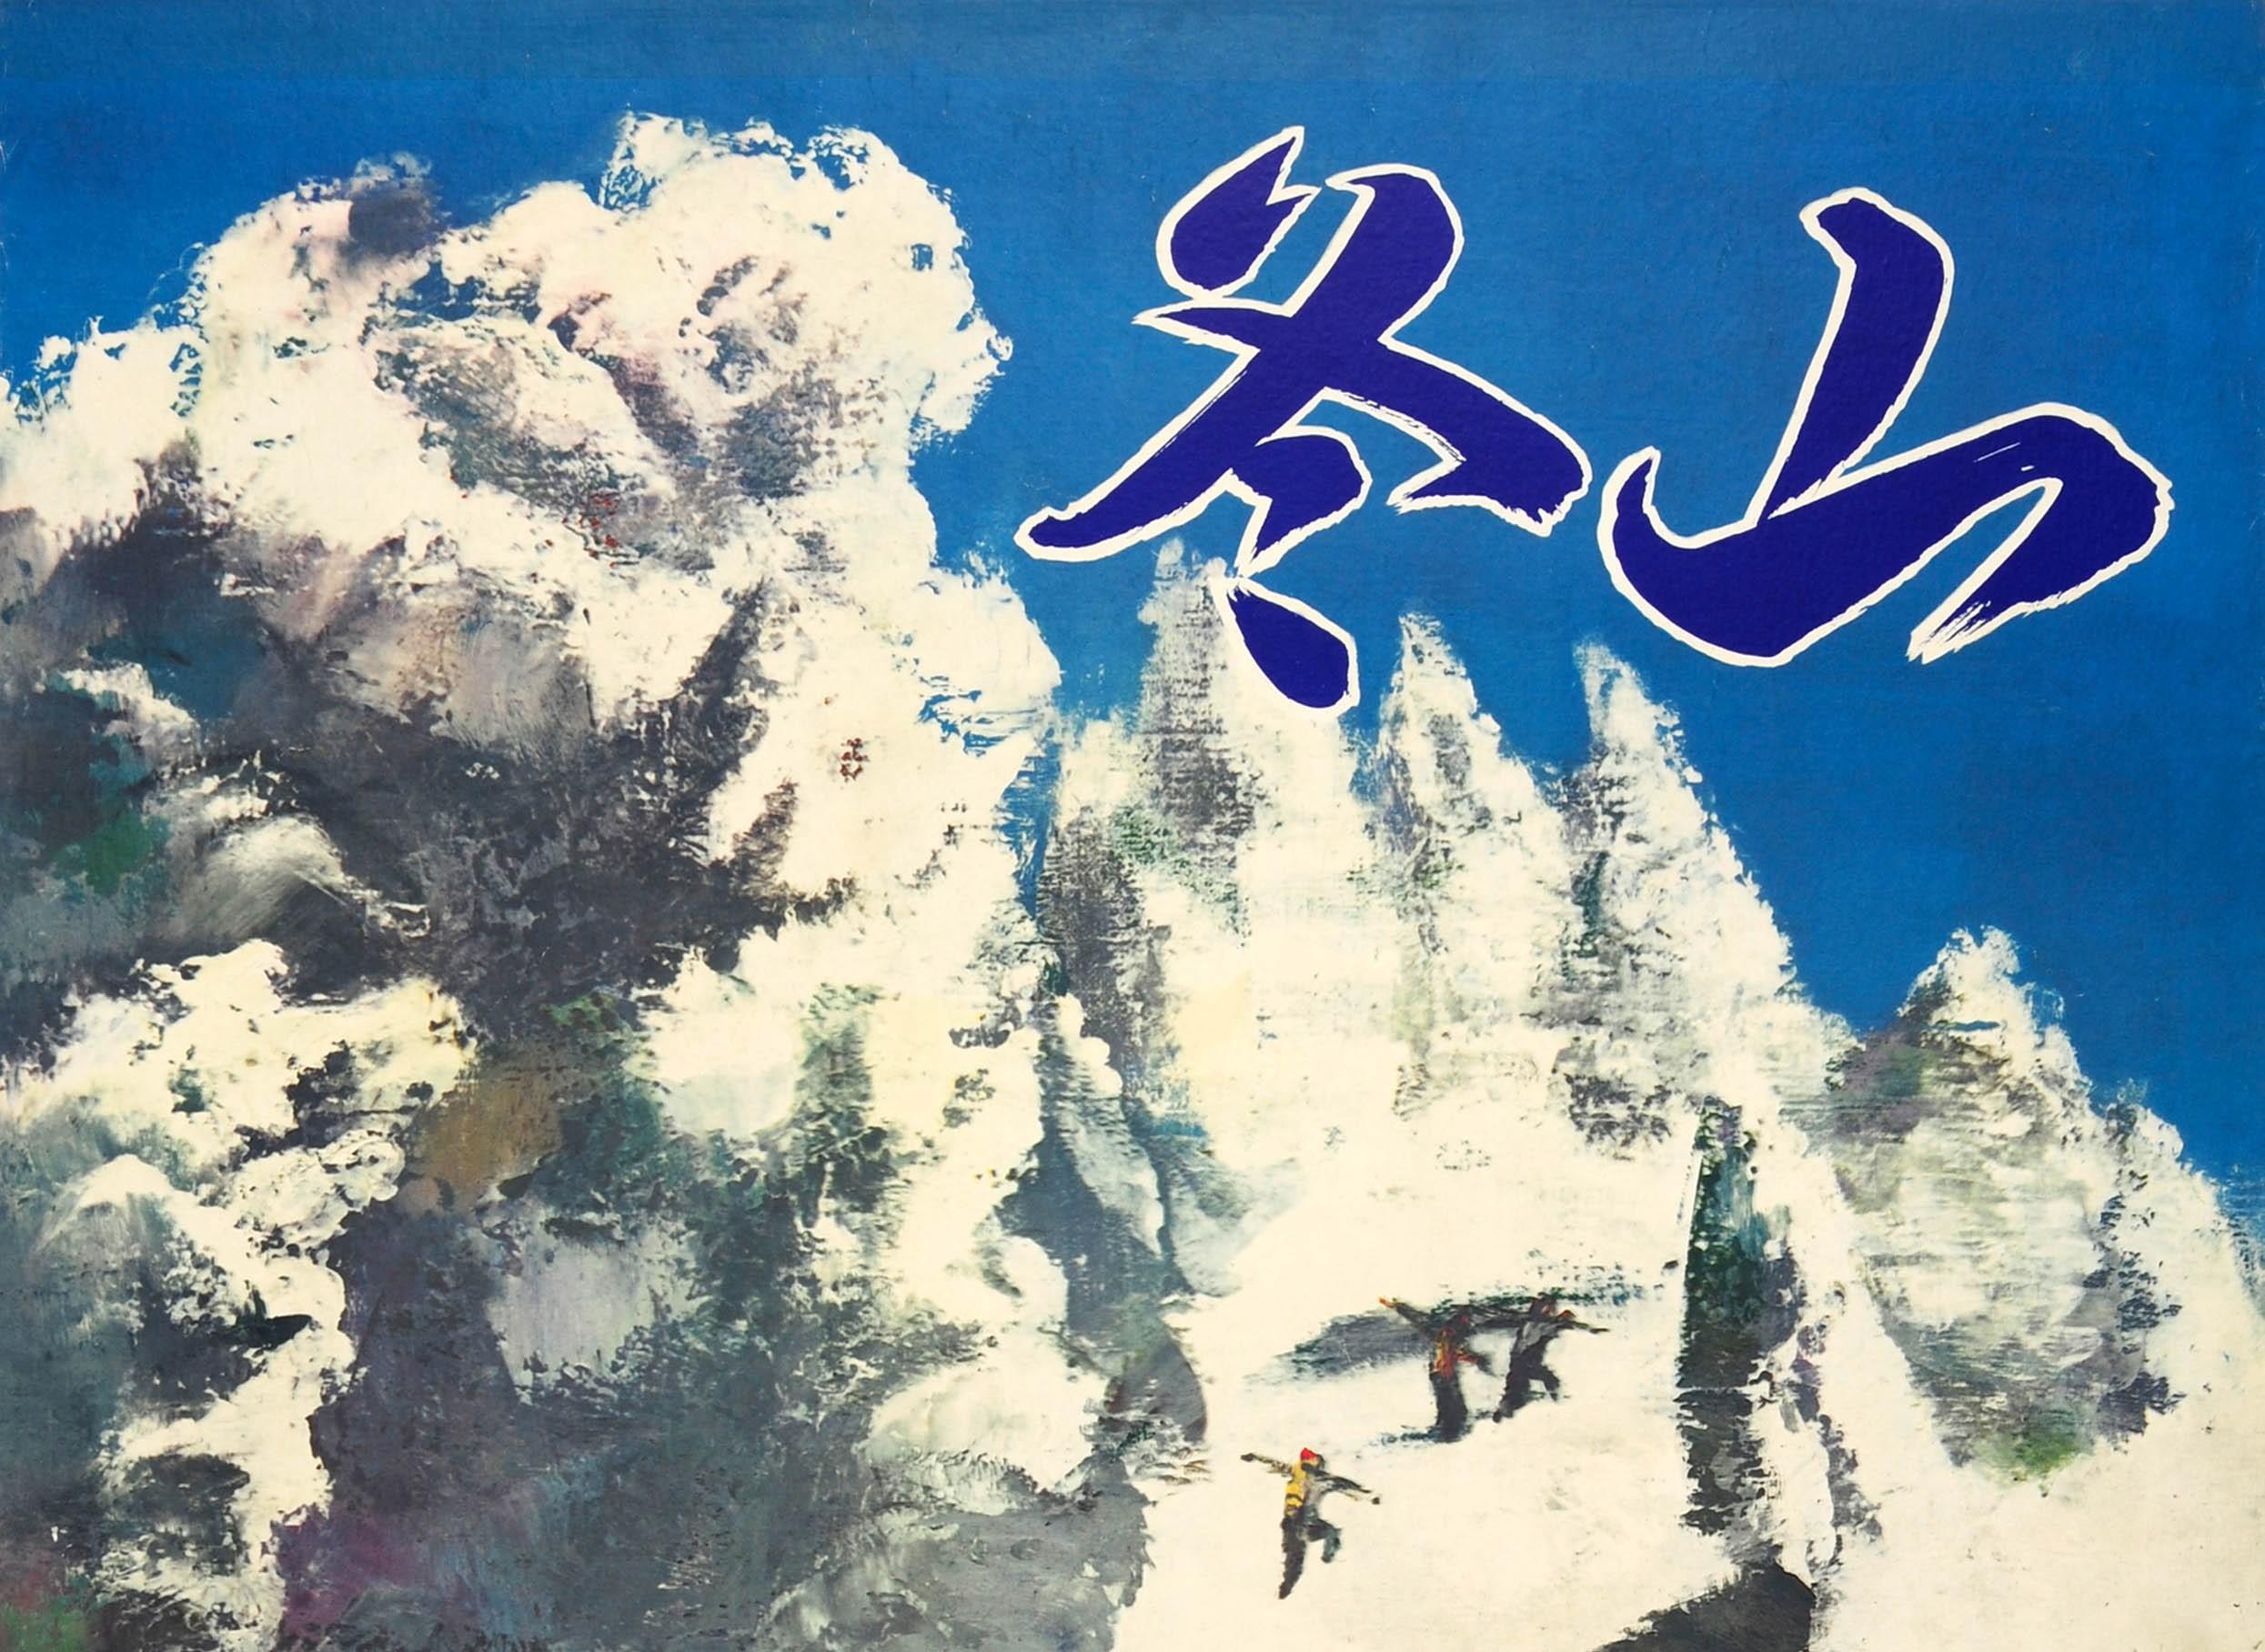 Original Vintage Winter Sport And Skiing Poster For The Tohoku Ski Resort Japan – Print von Unknown